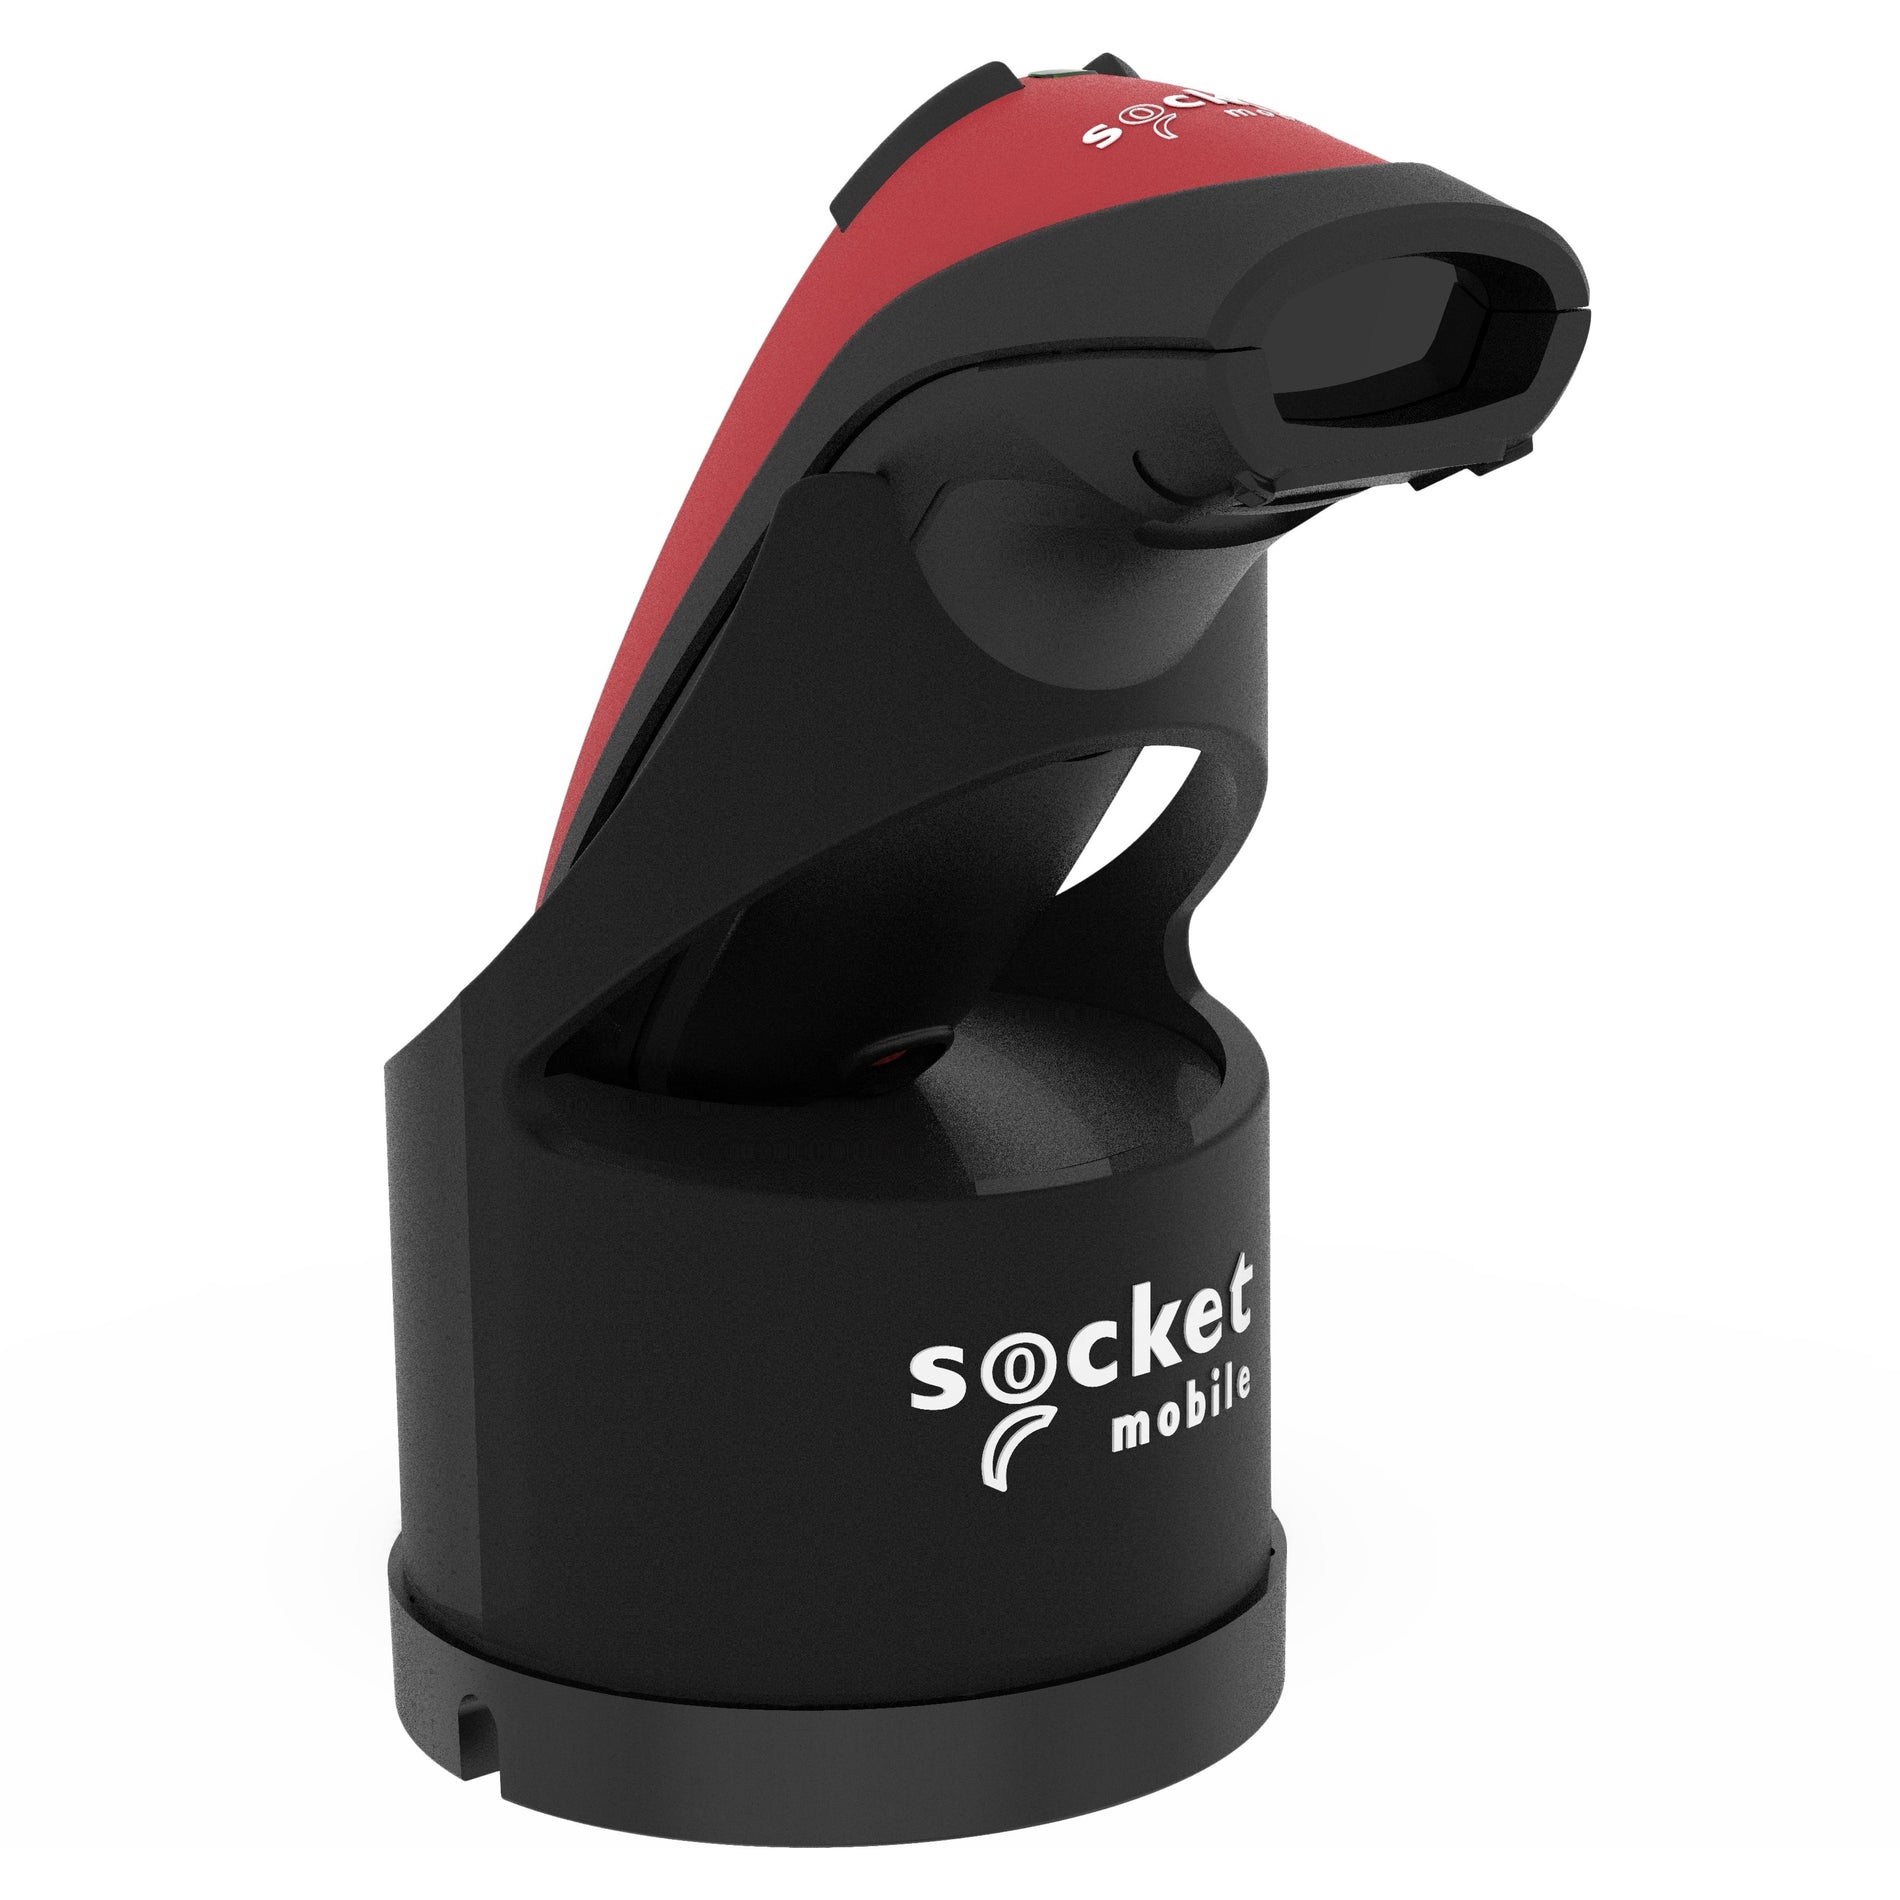 Socket Mobile CX3781-2541 DuraScan D740 Universal Barcode Scanner Red & Charging Dock